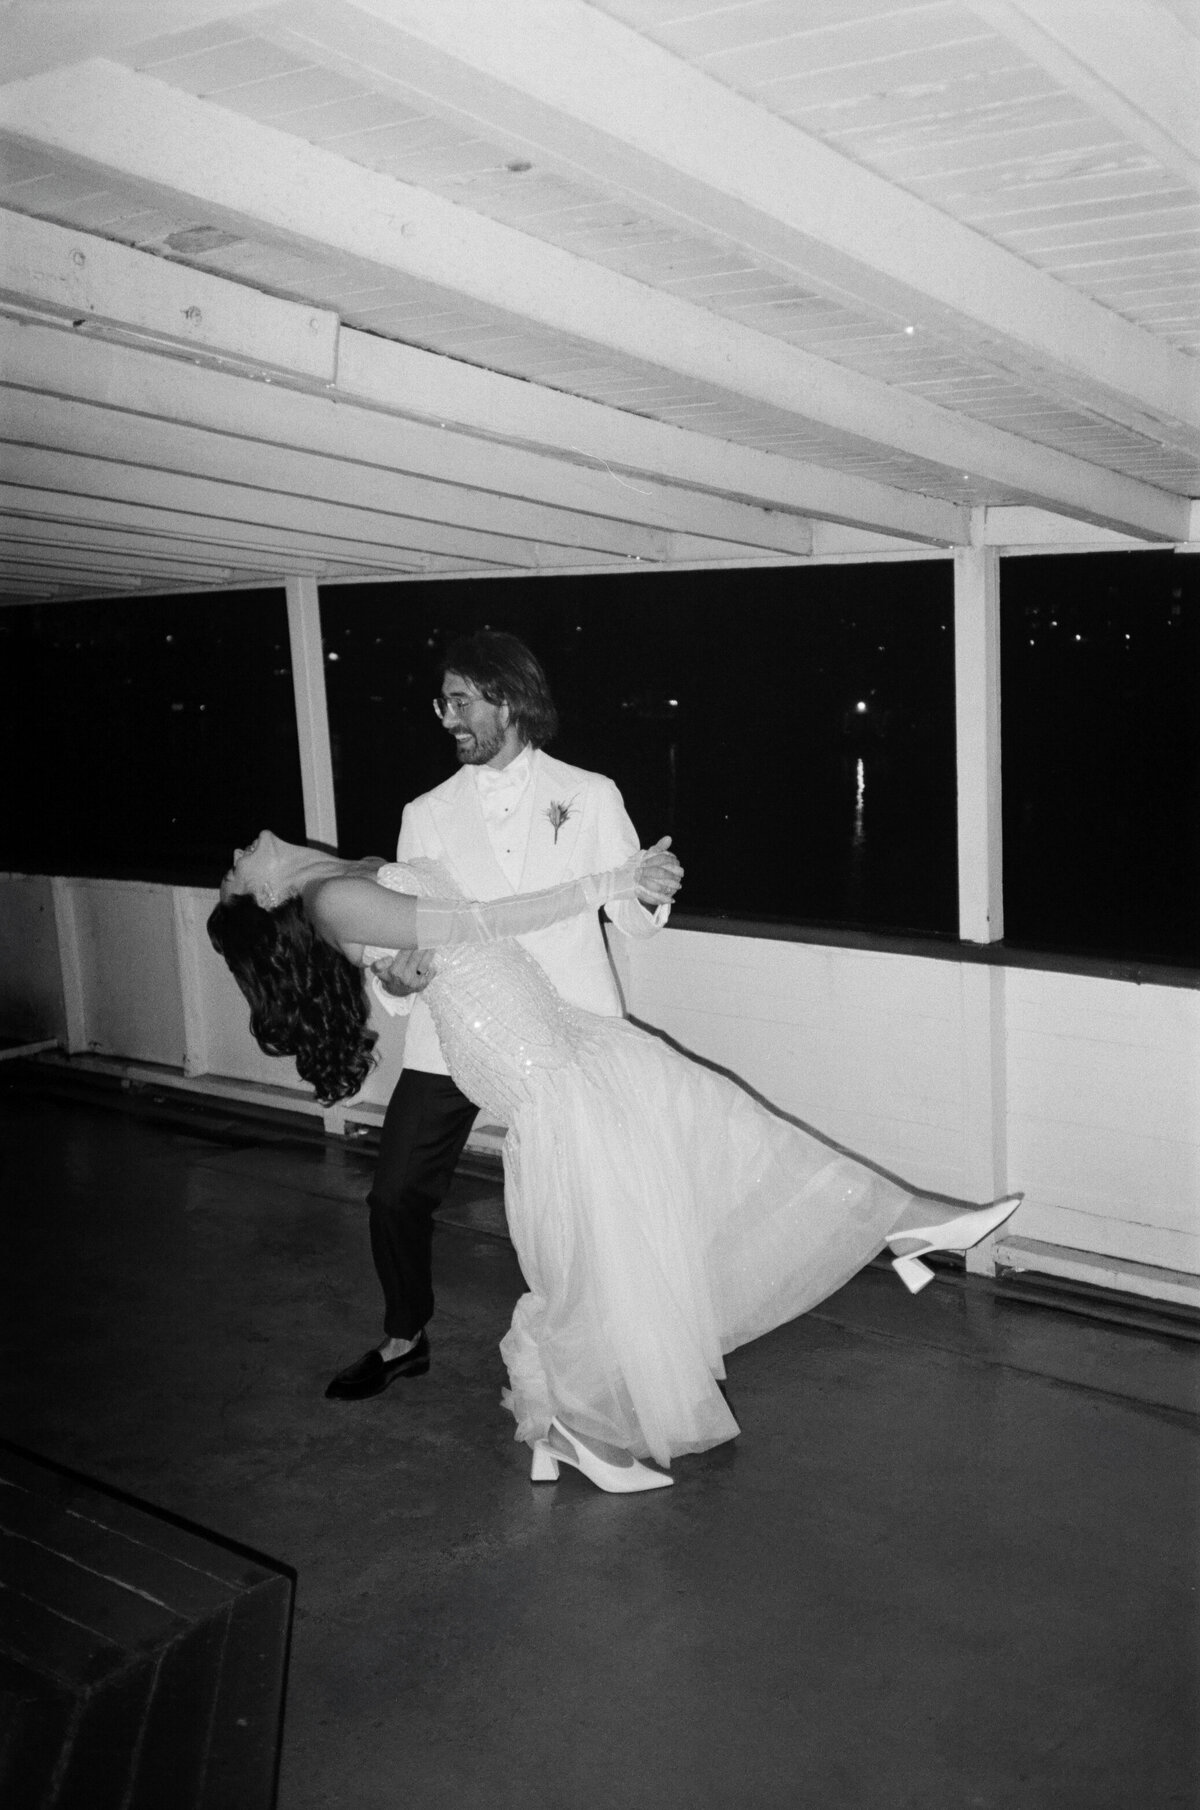 mv-skansonia-winter-wedding-seattle-35mm-film-23